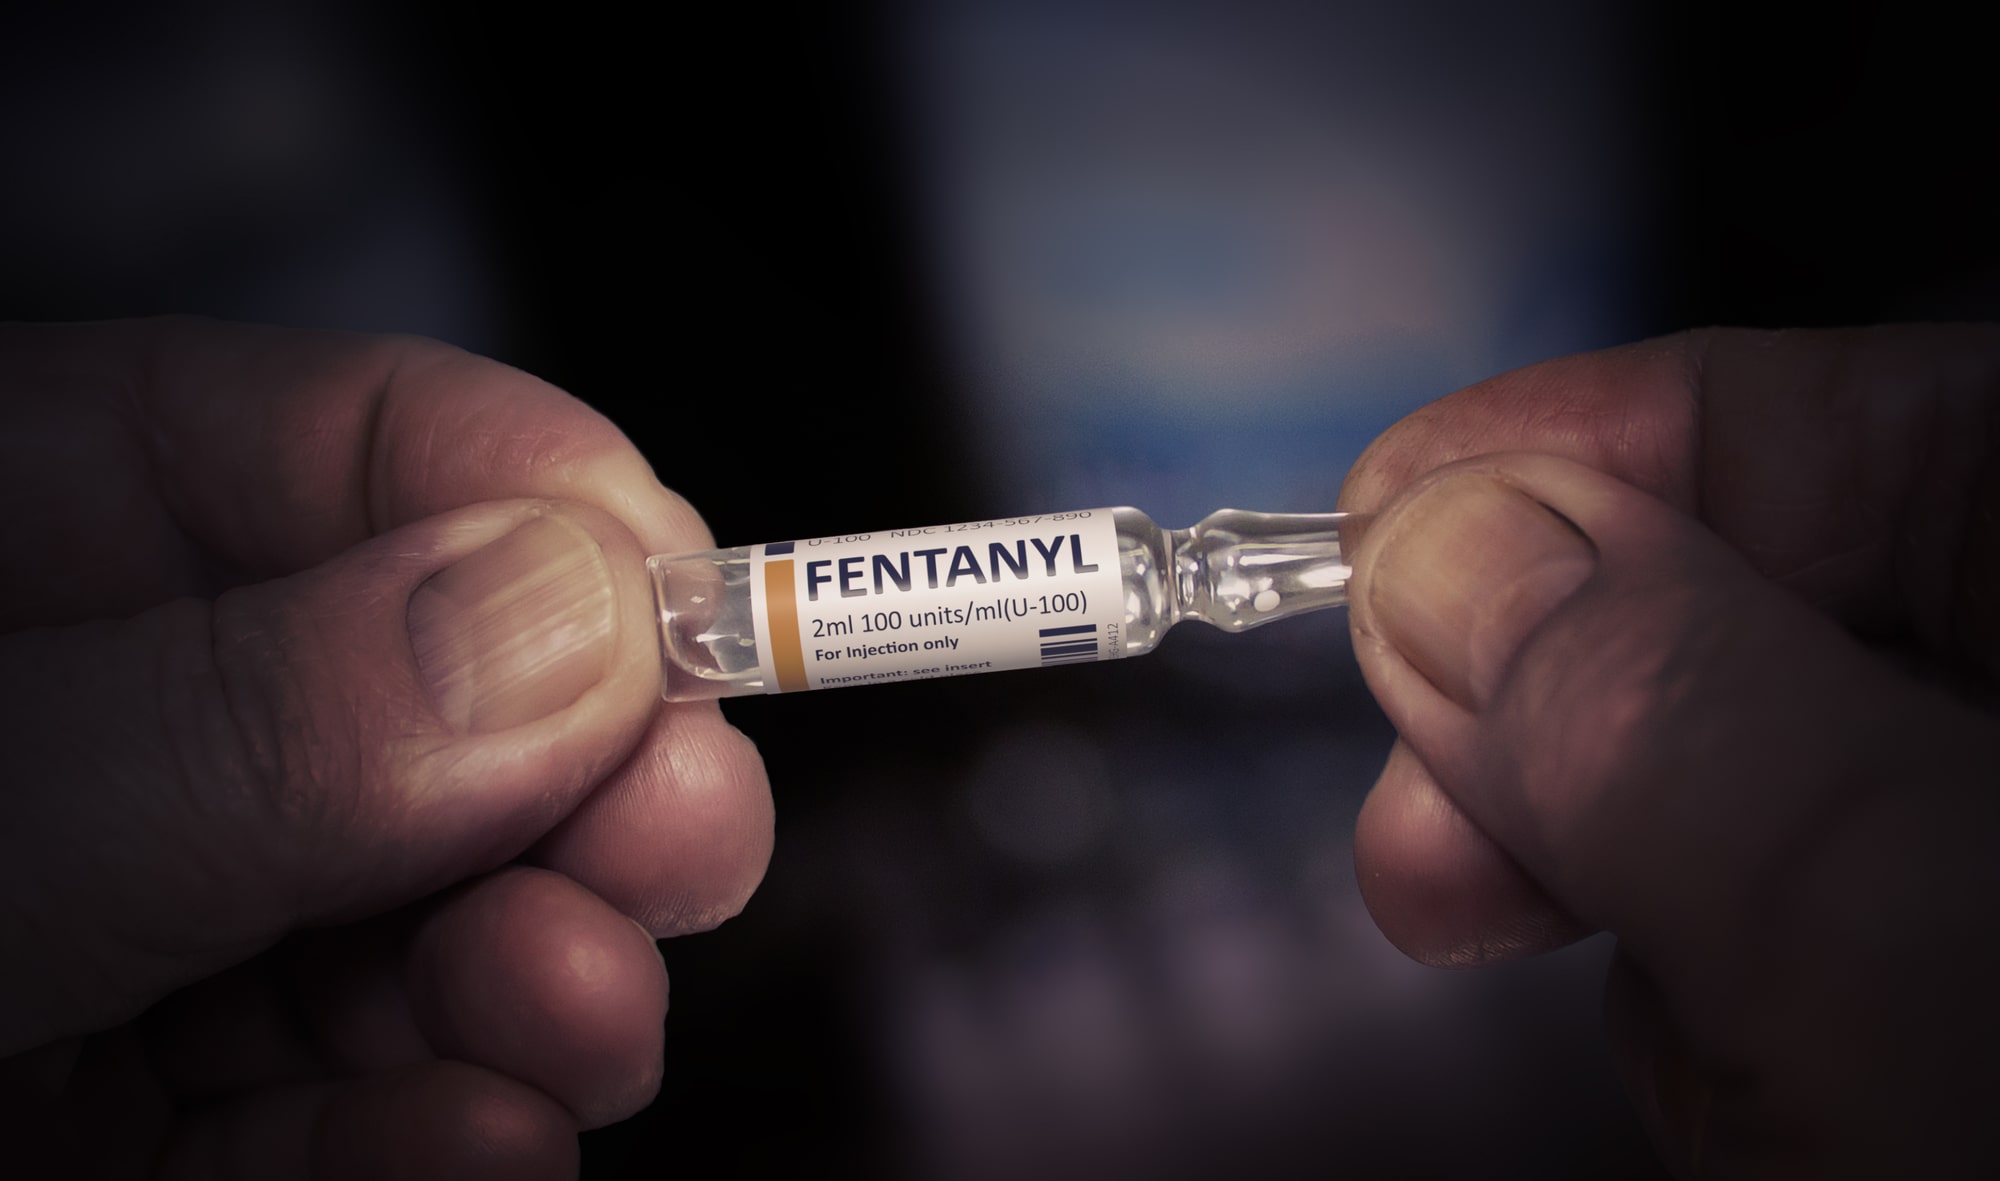 why is fentanyl dangerous